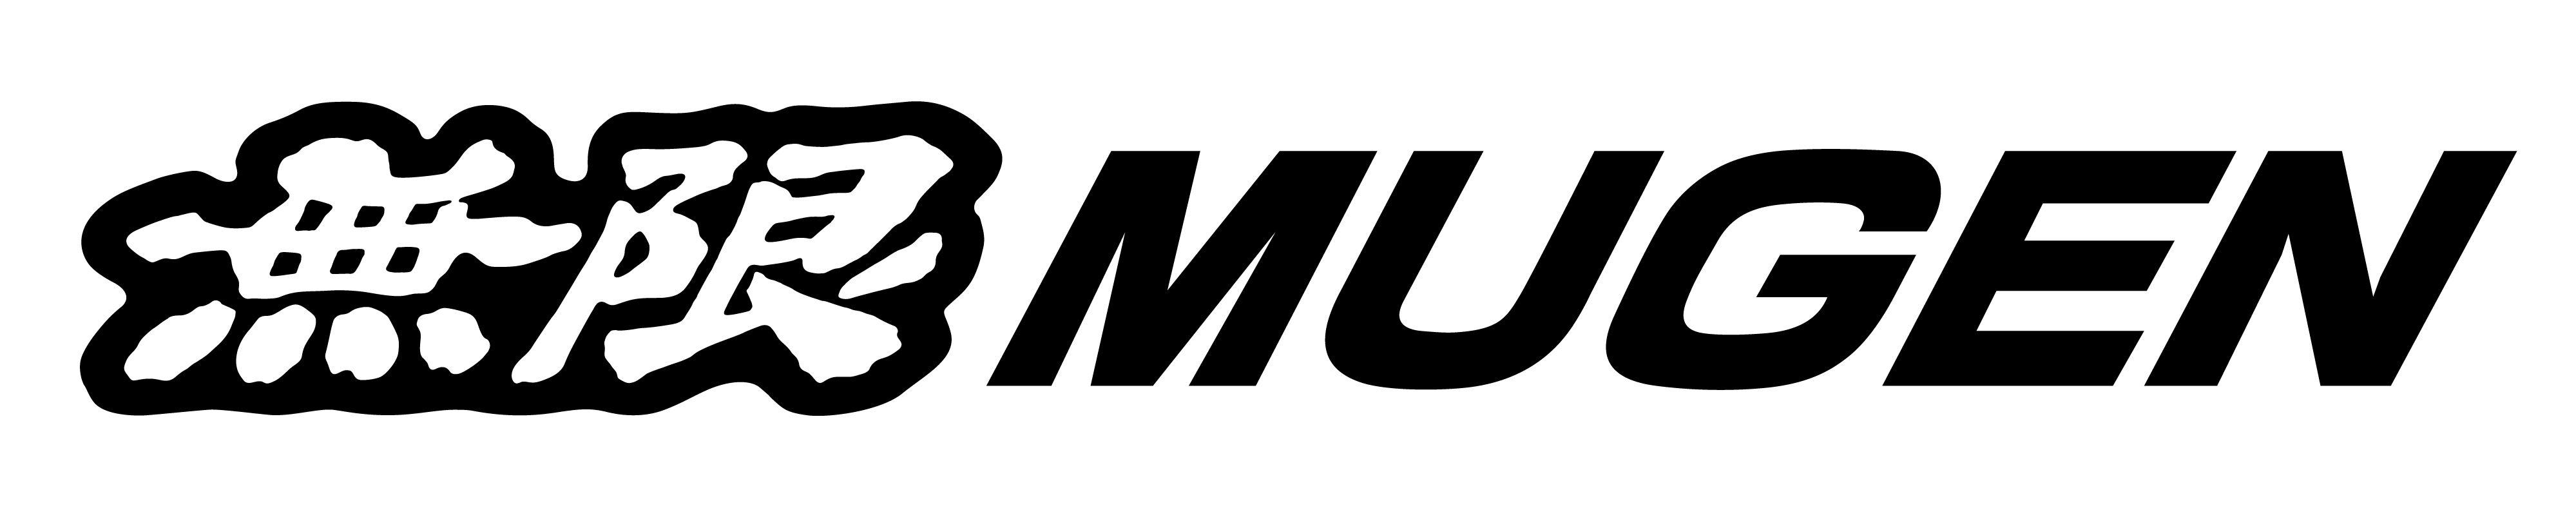 Mugen Logo Logodix